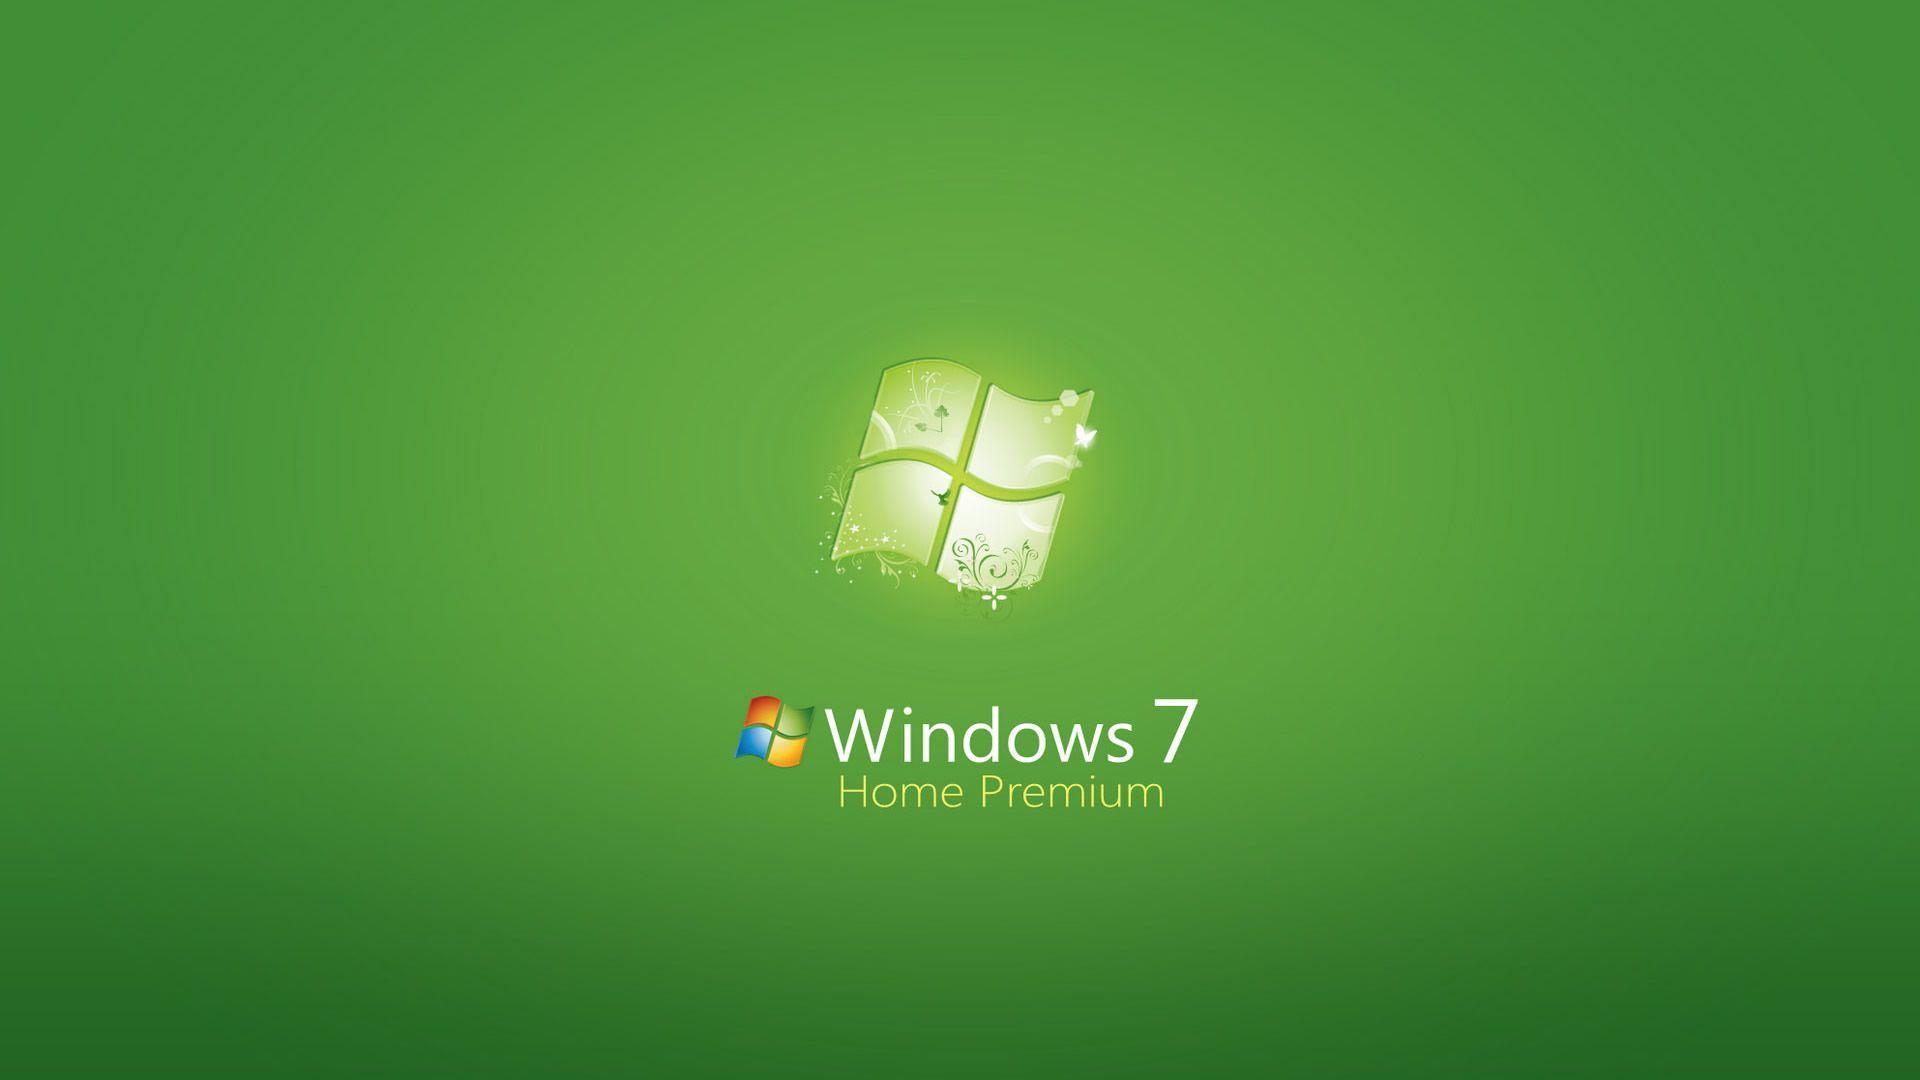 Wallpaper For > Windows 7 Background